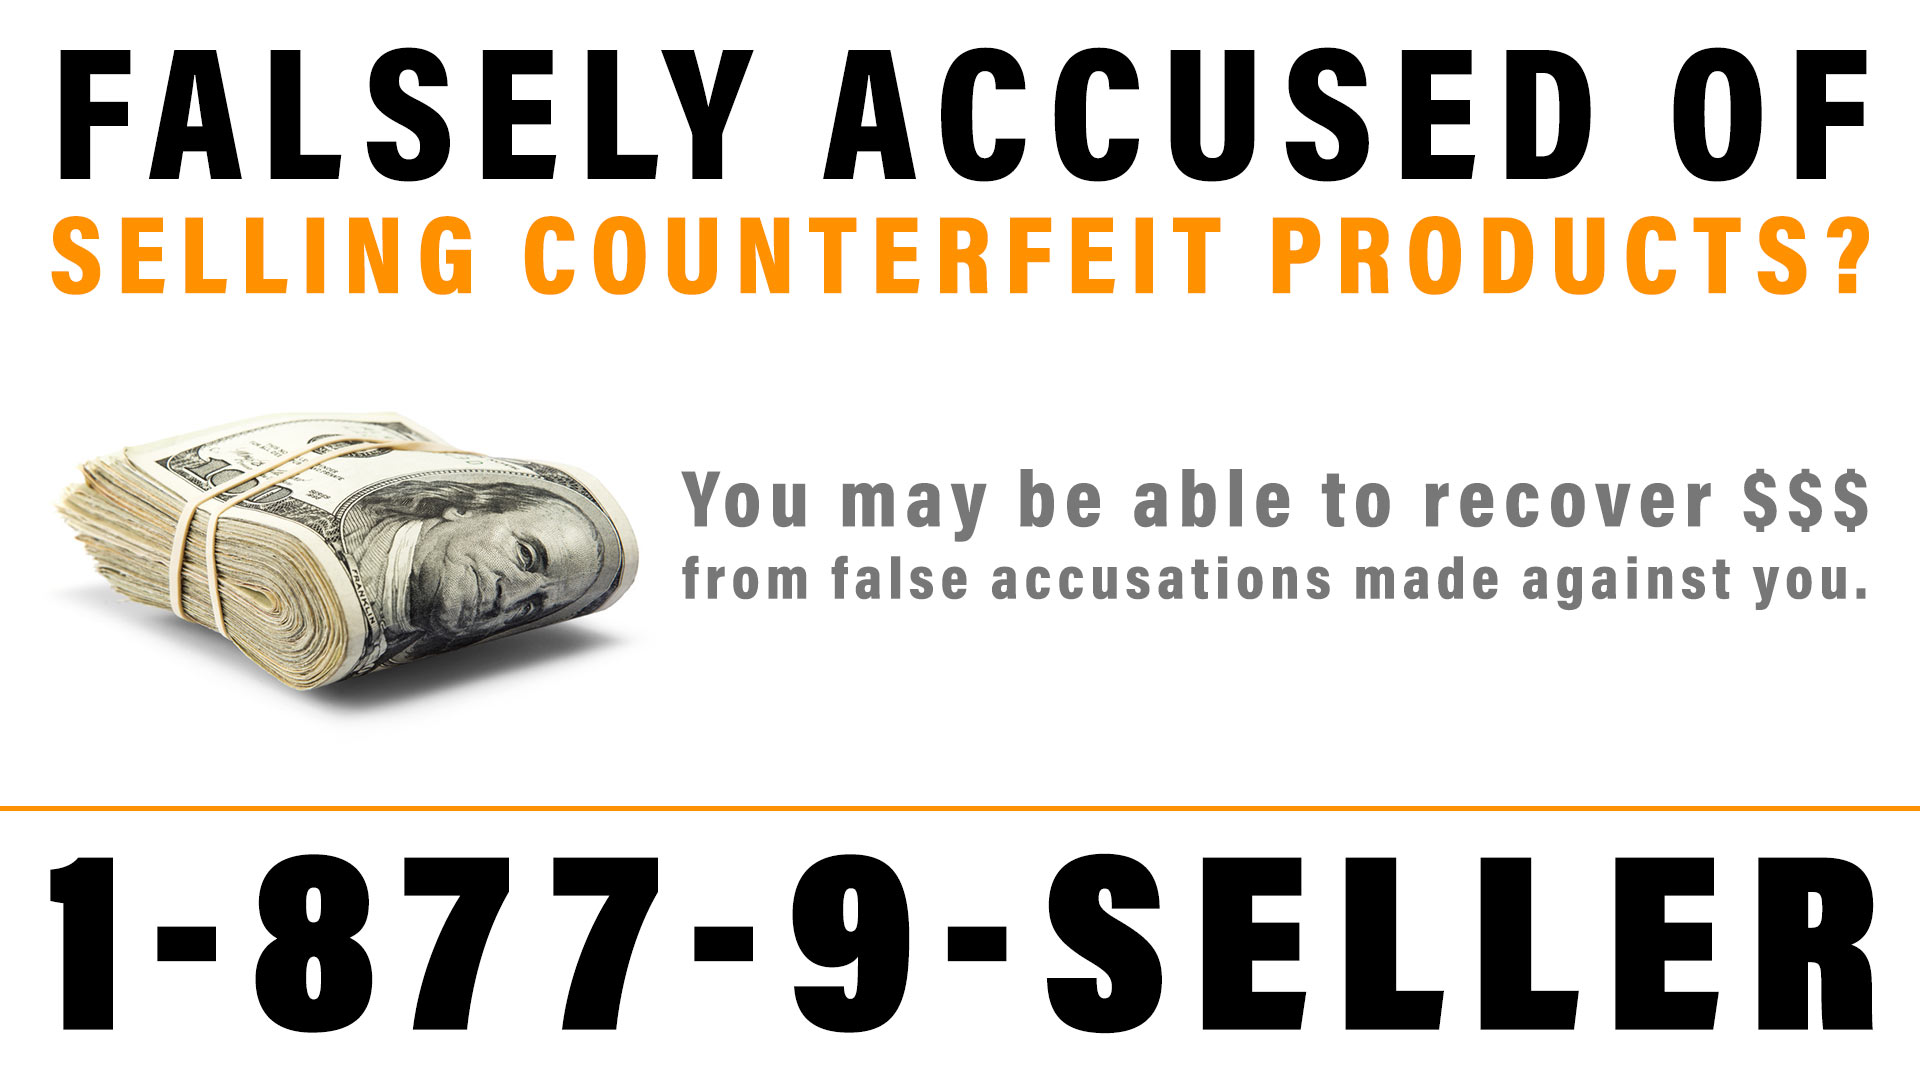 baseless counterfeit complaints